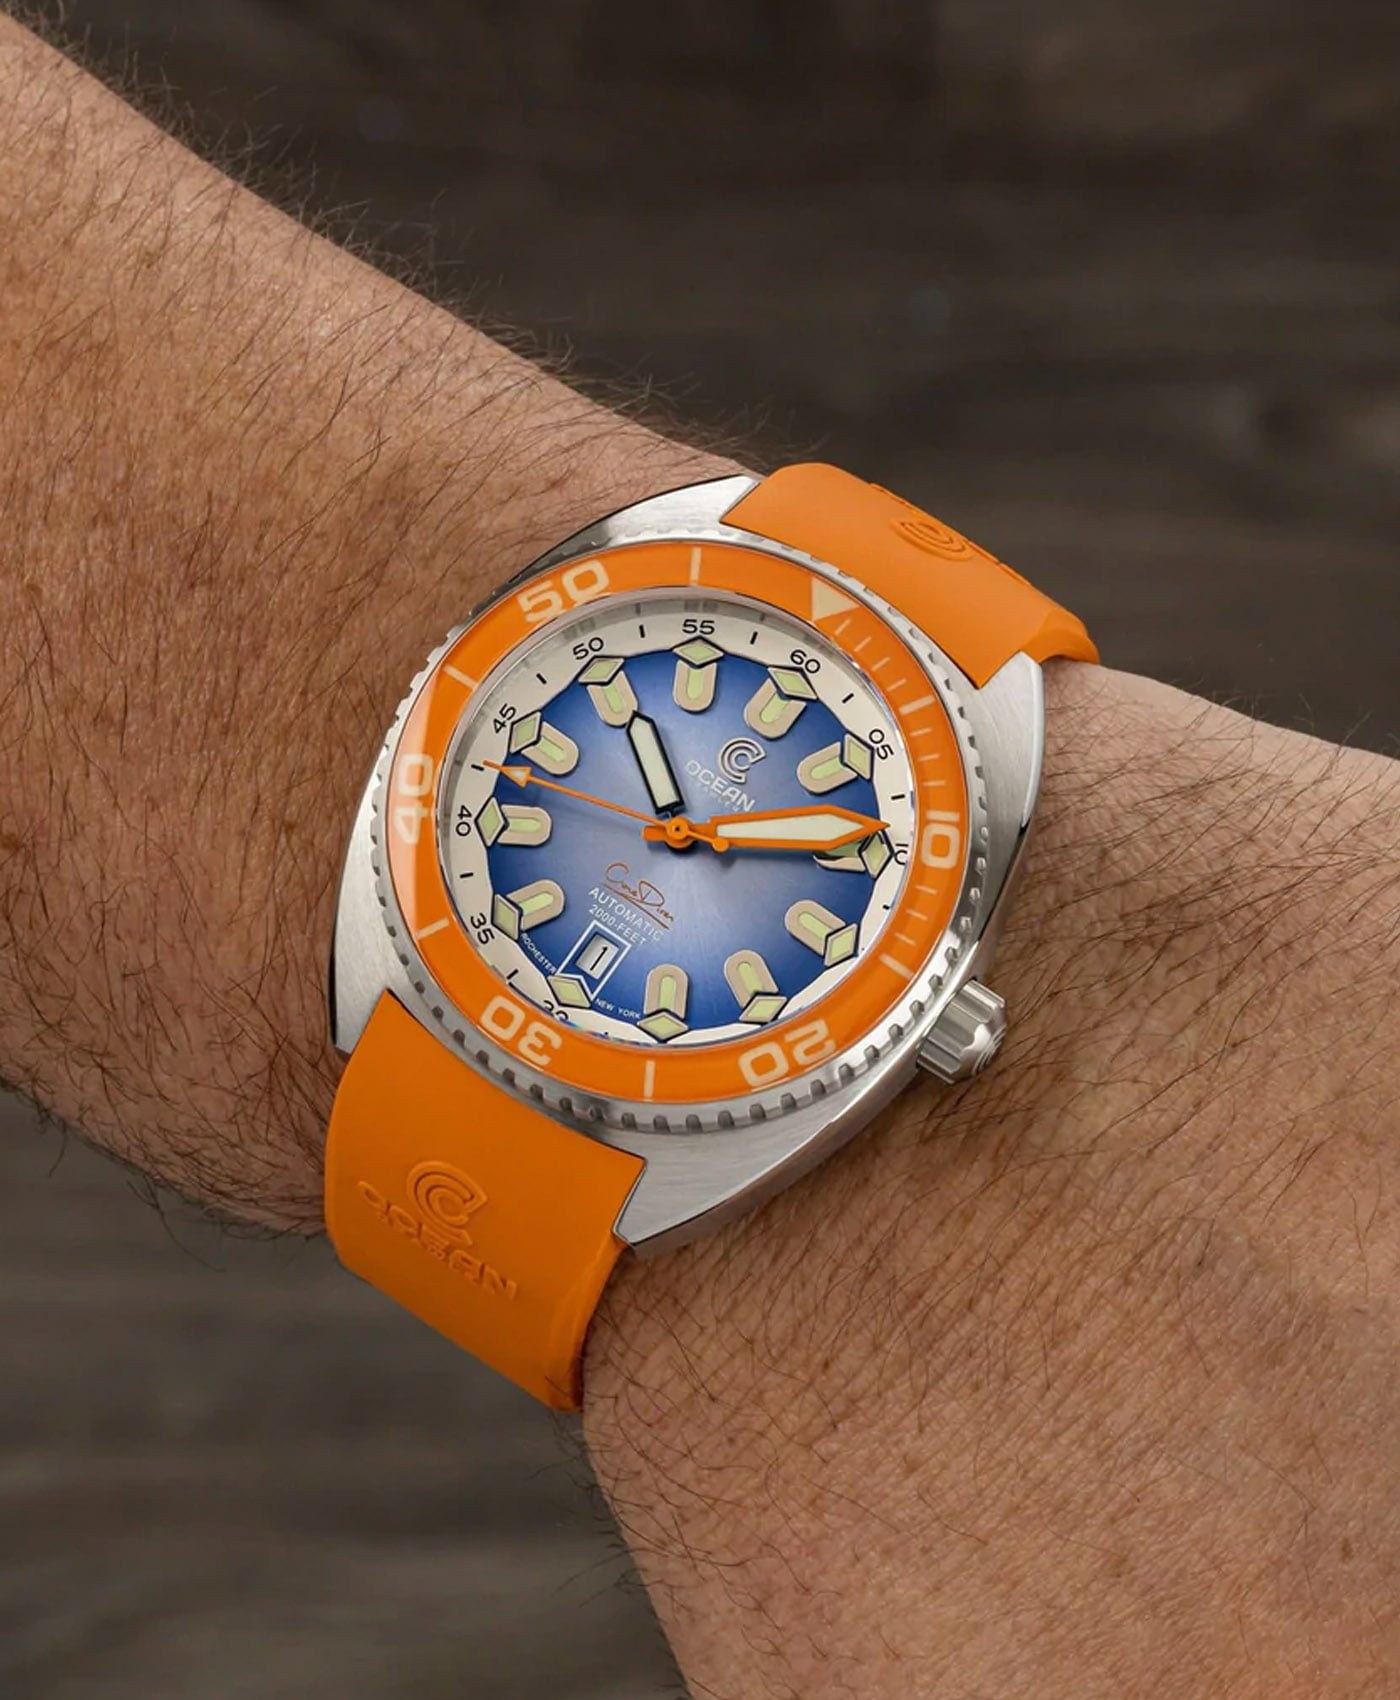 Ocean Crawler Core Diver V4 - Orange Bezel-rubber strap wrist shot-min